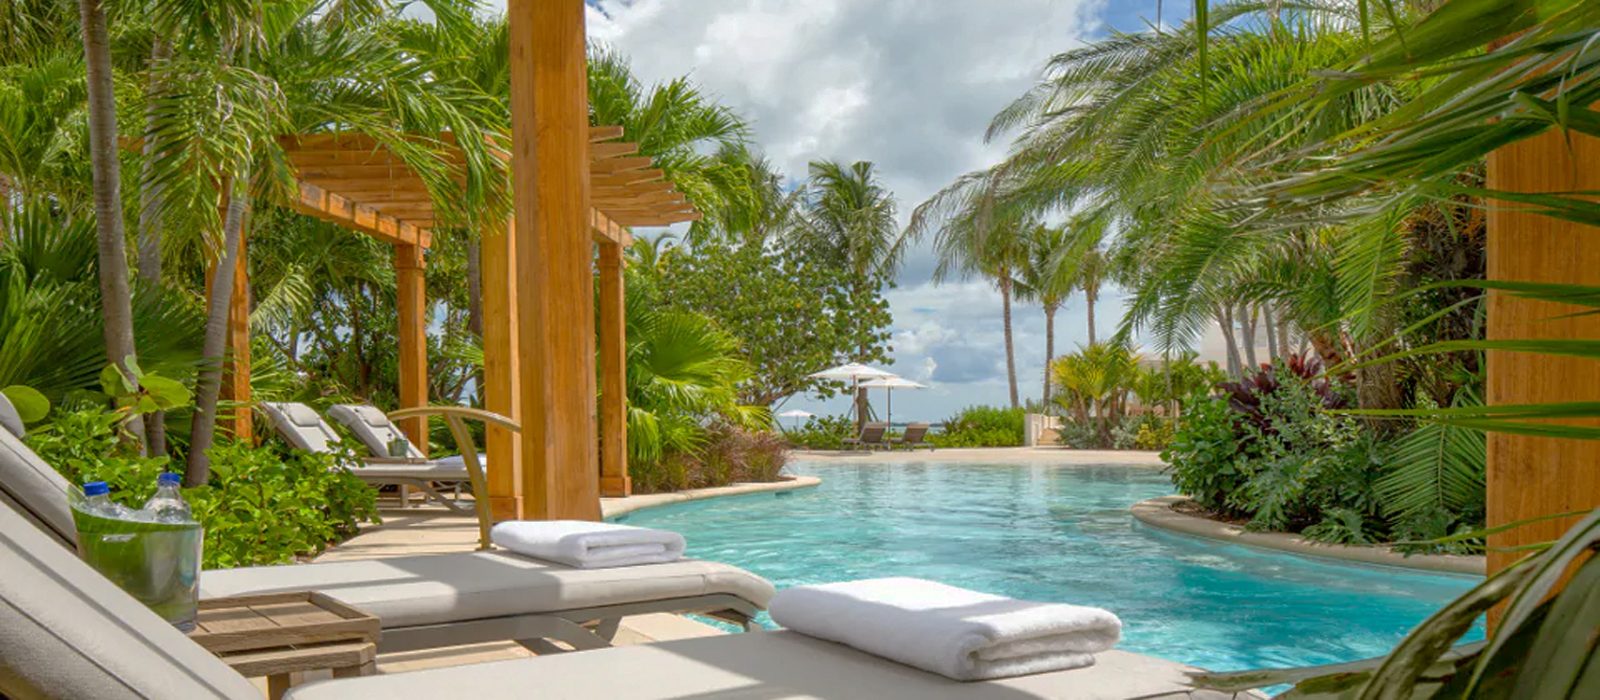 Luxury Bahamas Holiday Packages Rosewood Baha Mar Bahamas Header1